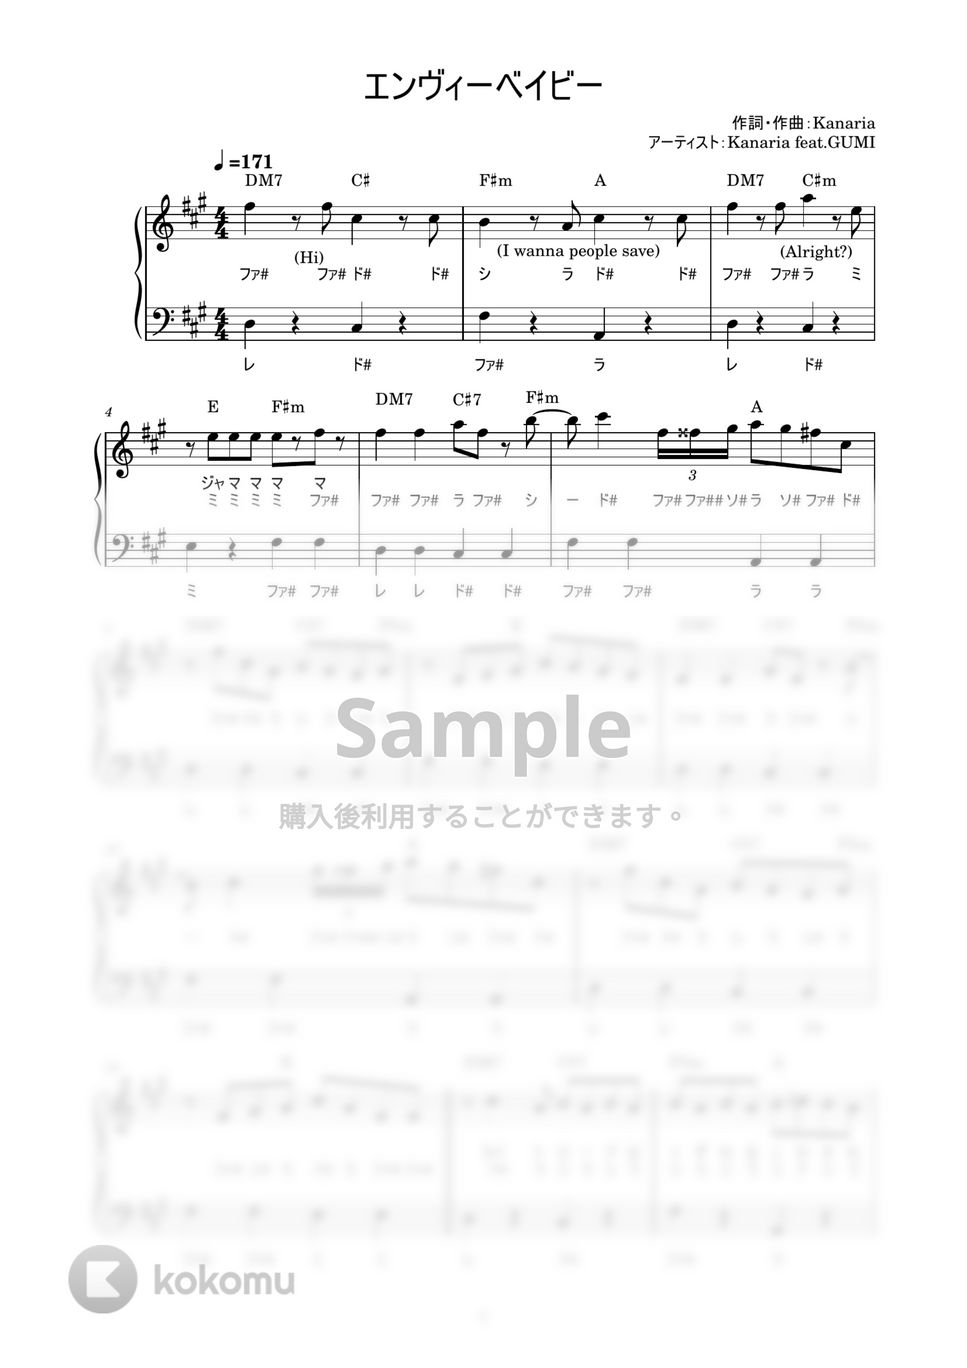 Kanaria feat.GUMI - エンヴィーベイビー (かんたん / 歌詞付き / ドレミ付き / 初心者) by piano.tokyo